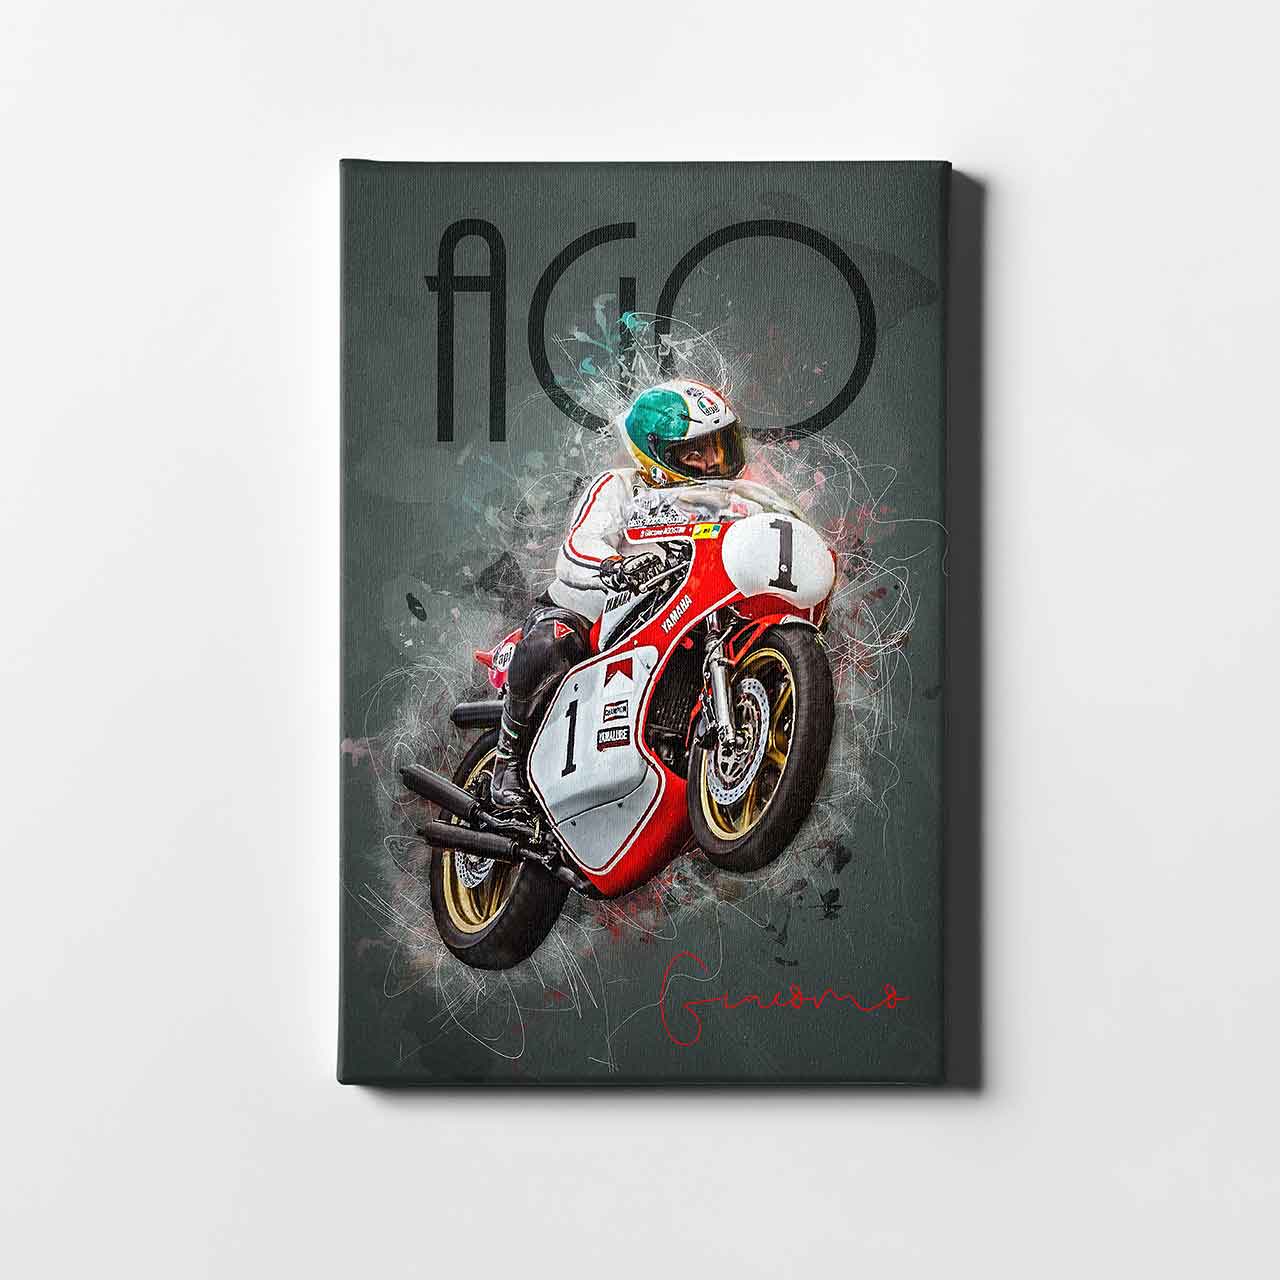 Leinwanddruck Artwork - Giacomo Agostini "AGO" auf Yamaha - GA01